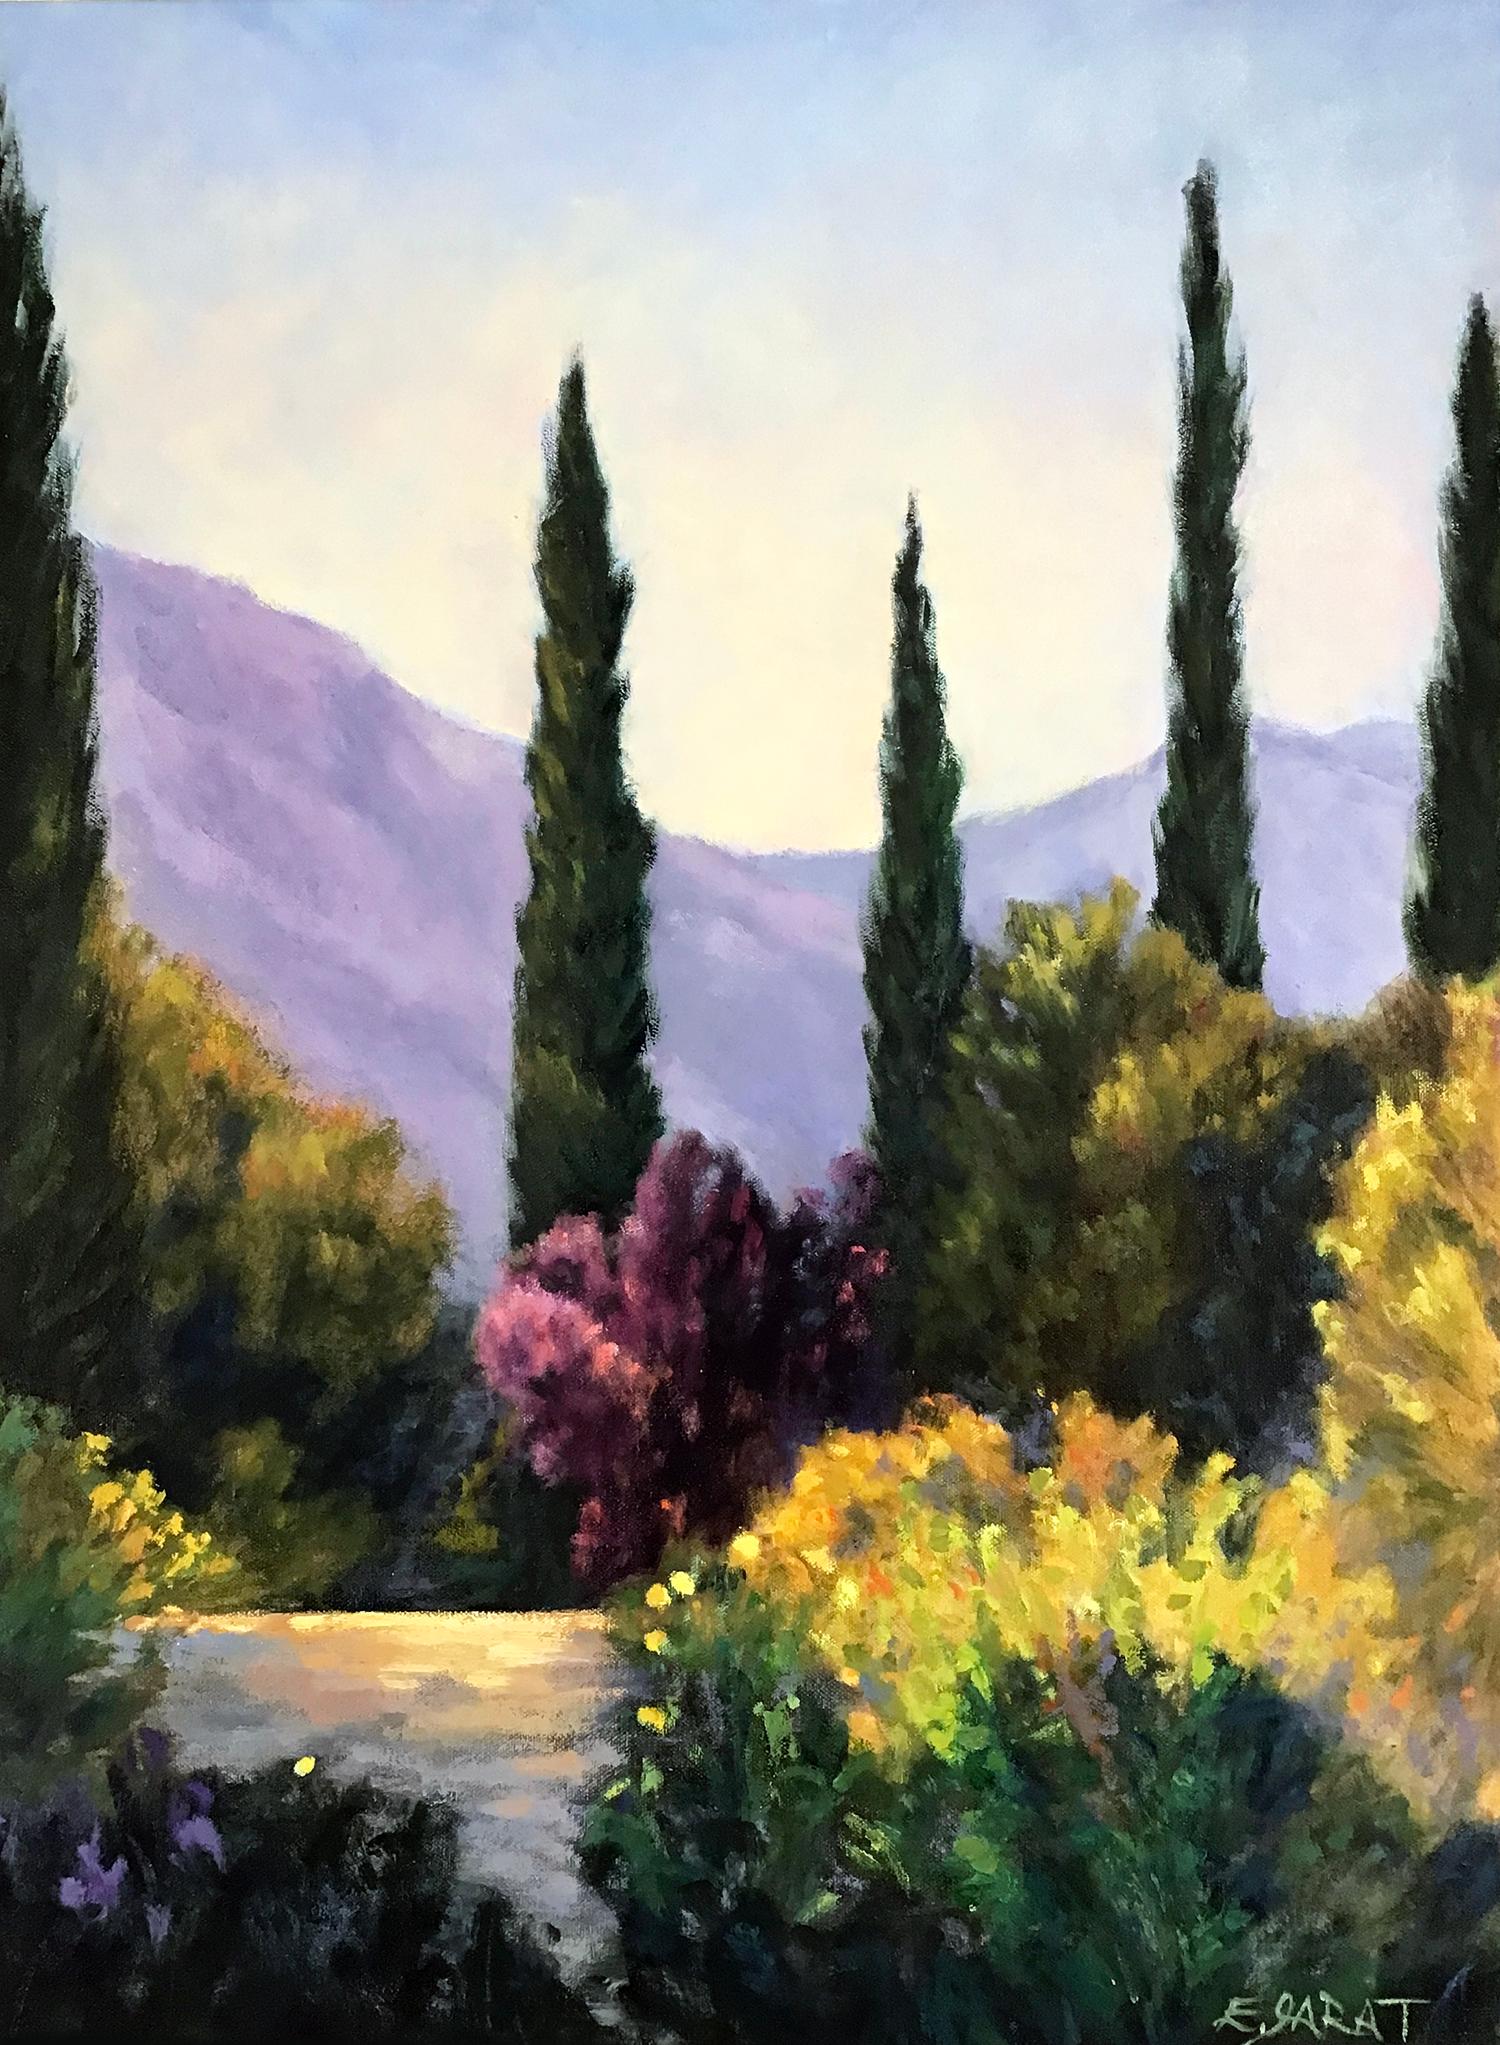 Elizabeth Garat Landscape Painting - Garden Vista, Cypresses and Plum, Oil Painting